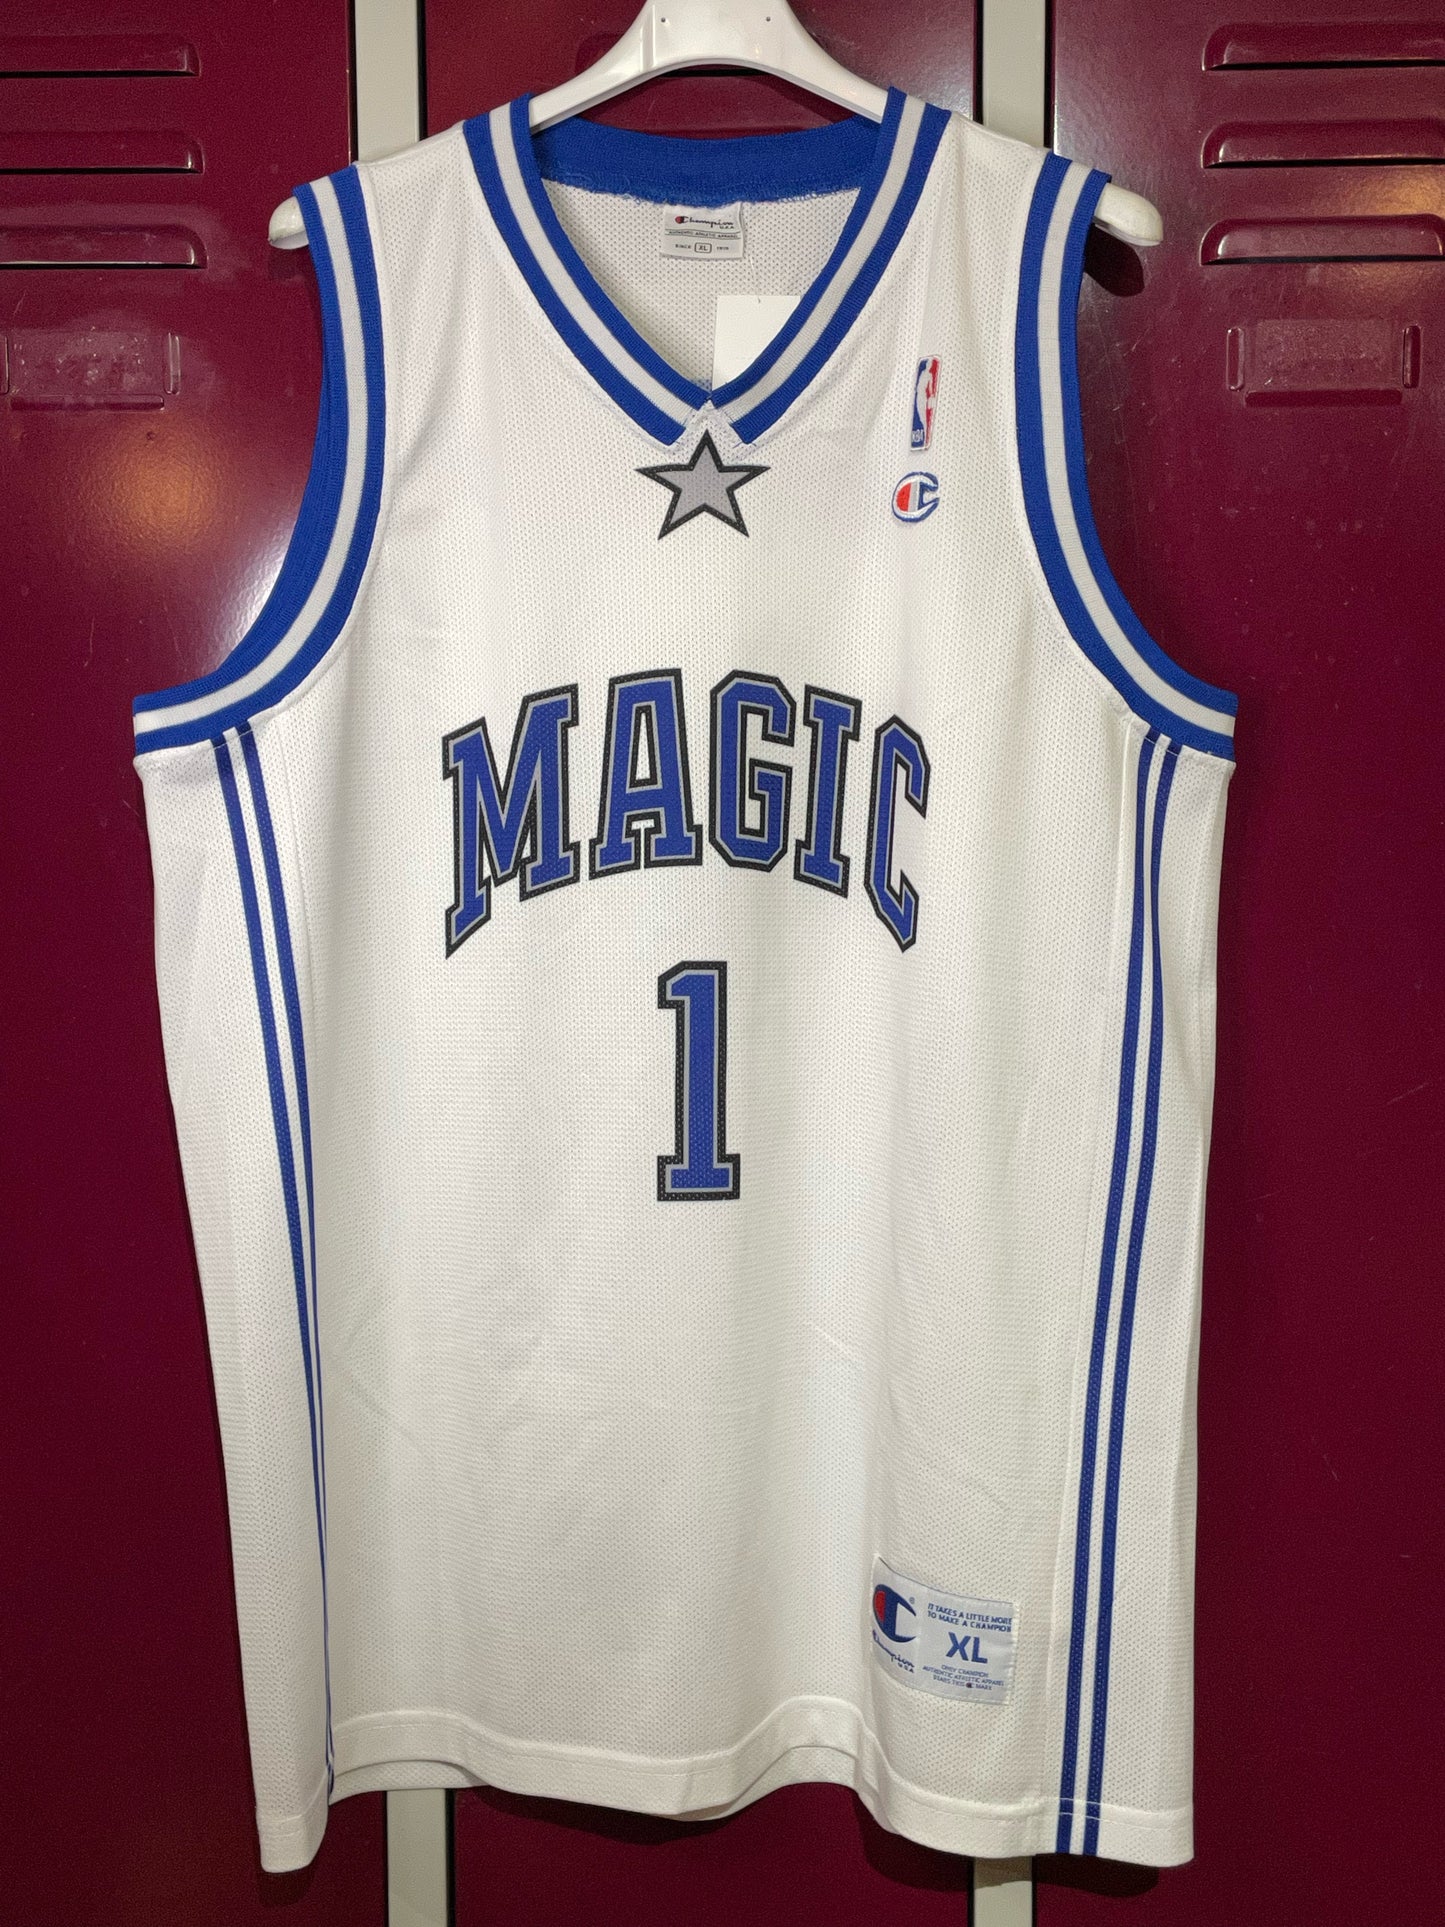 CHAMPION MAGIC ORLANDO "TRACY MCGRADY" NBA JERSEY  SZ: XL